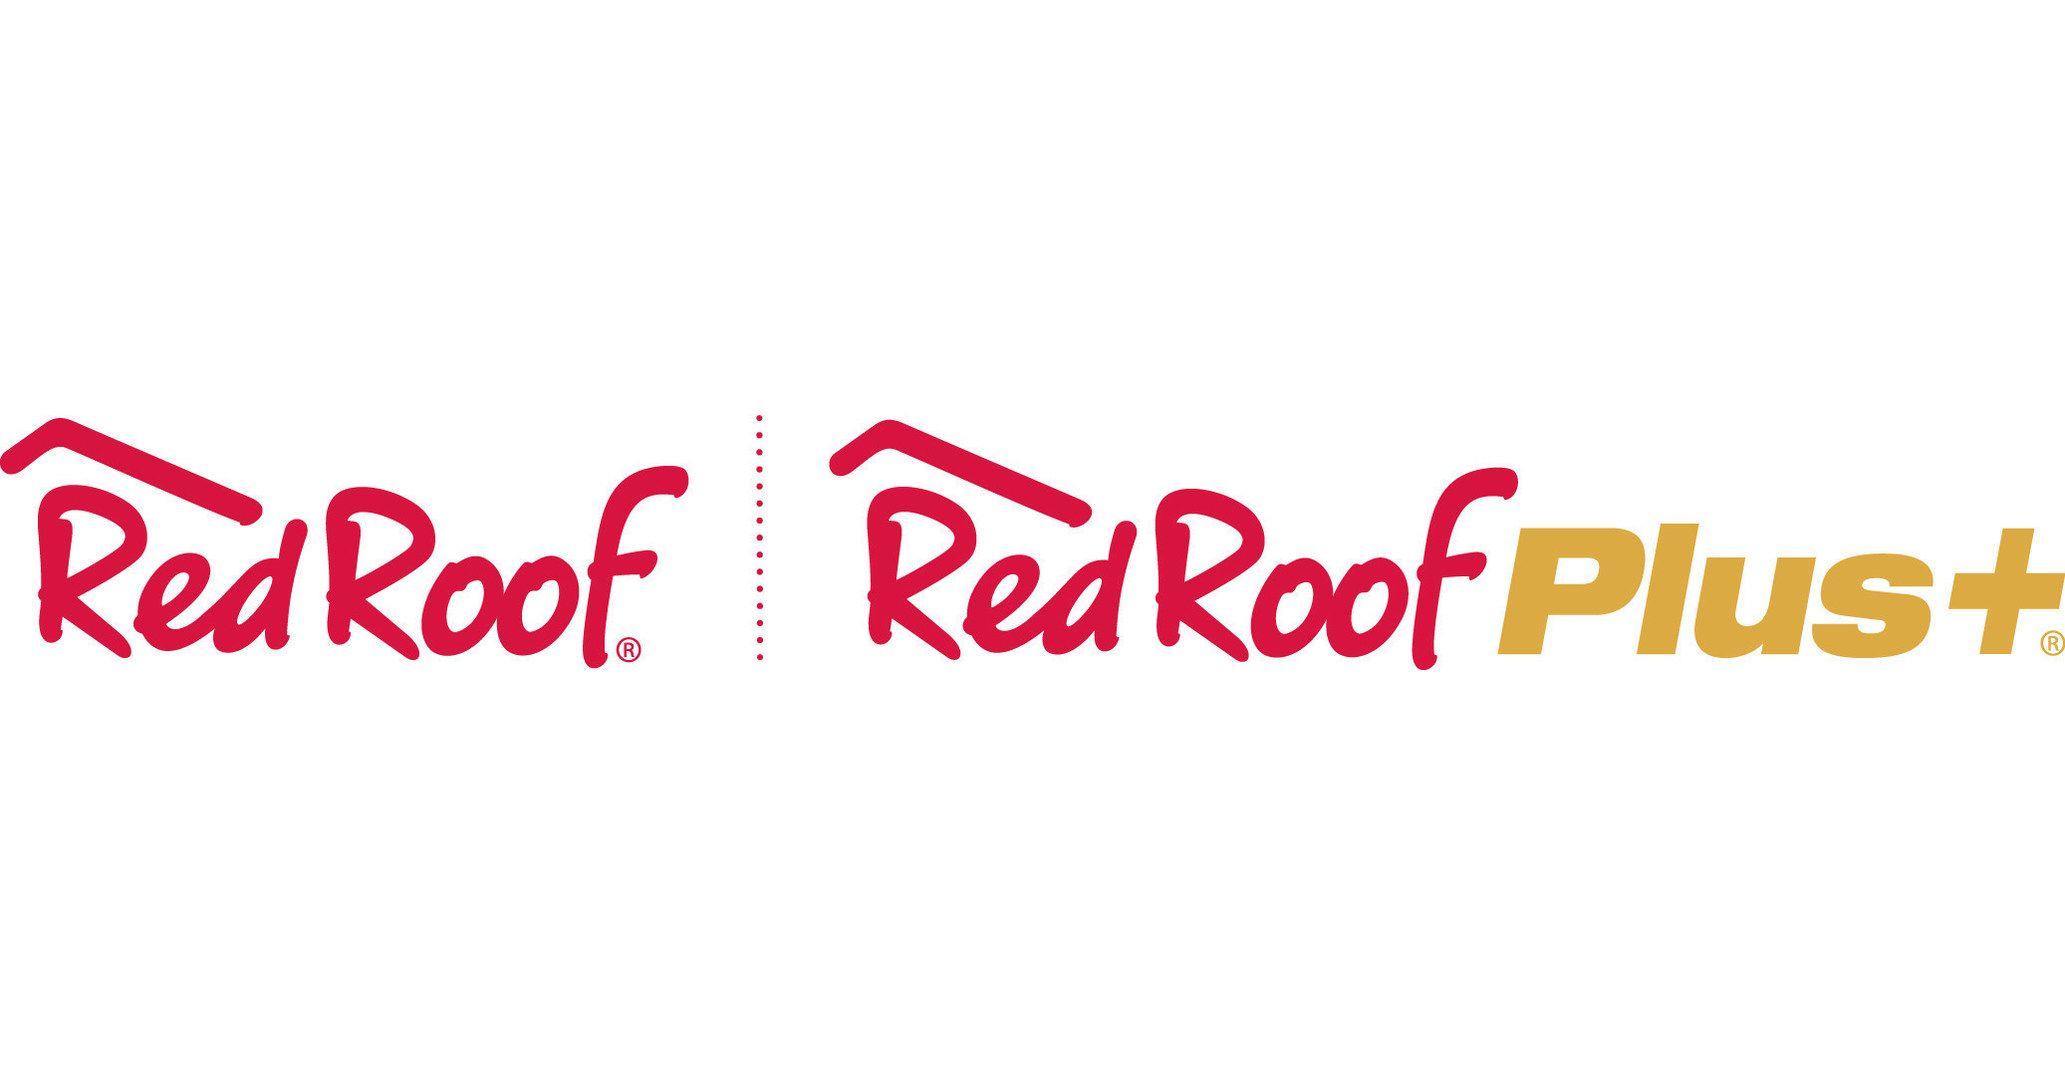 Red Roof Plus Logo - Red roof inn Logos